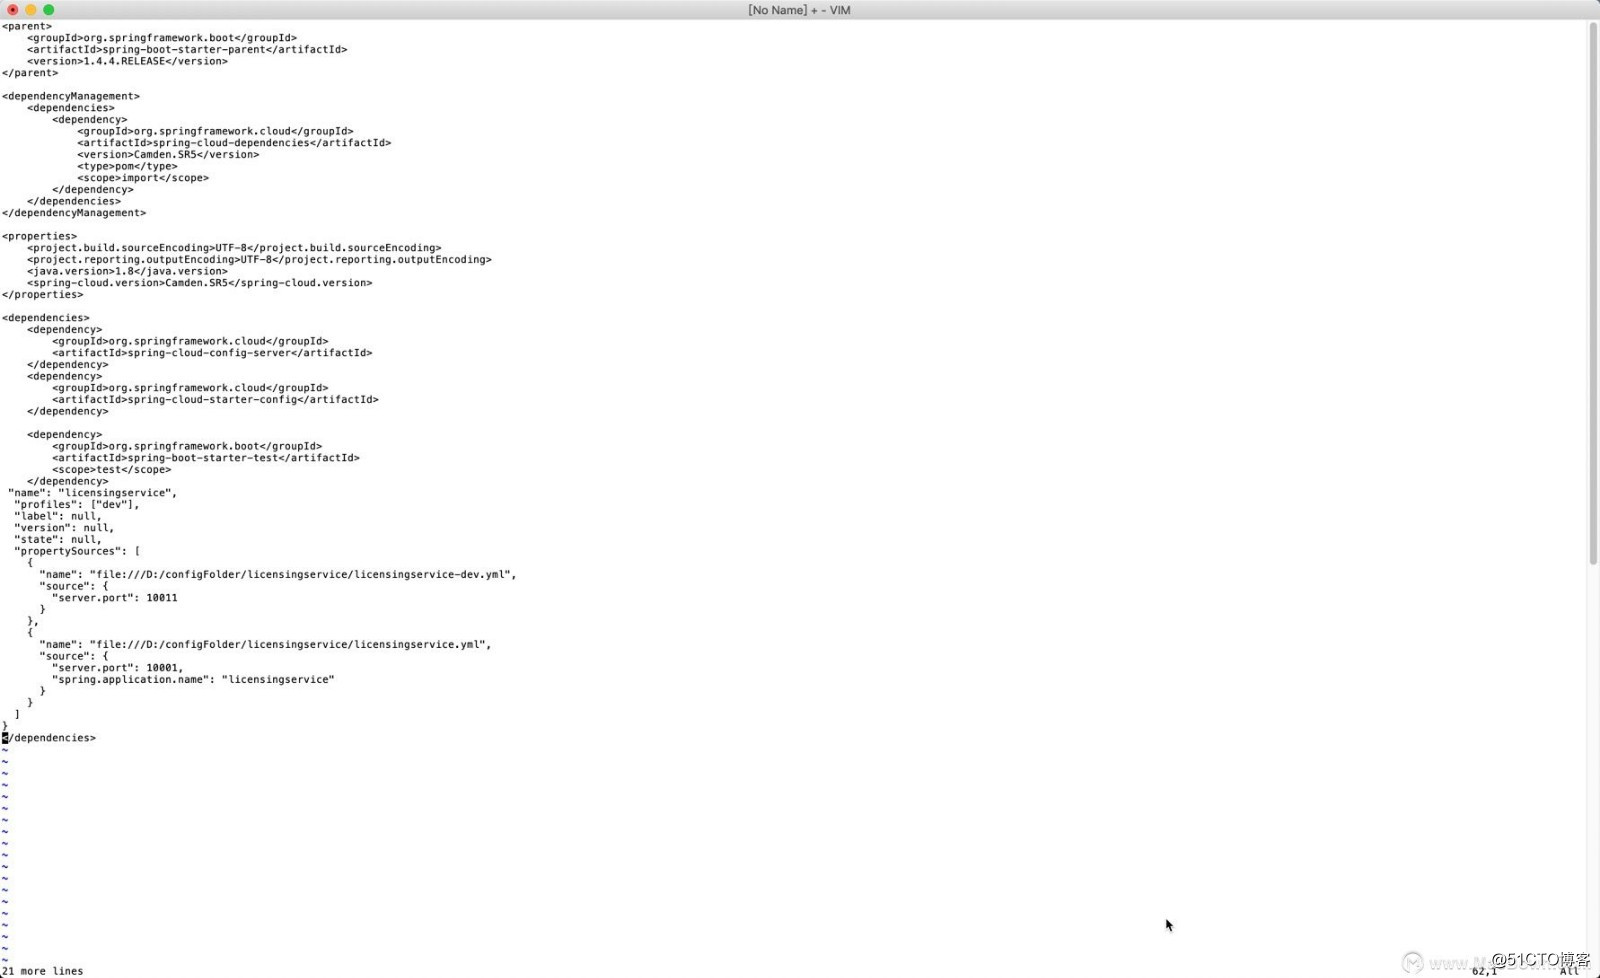 MacVim for Mac (text editor)